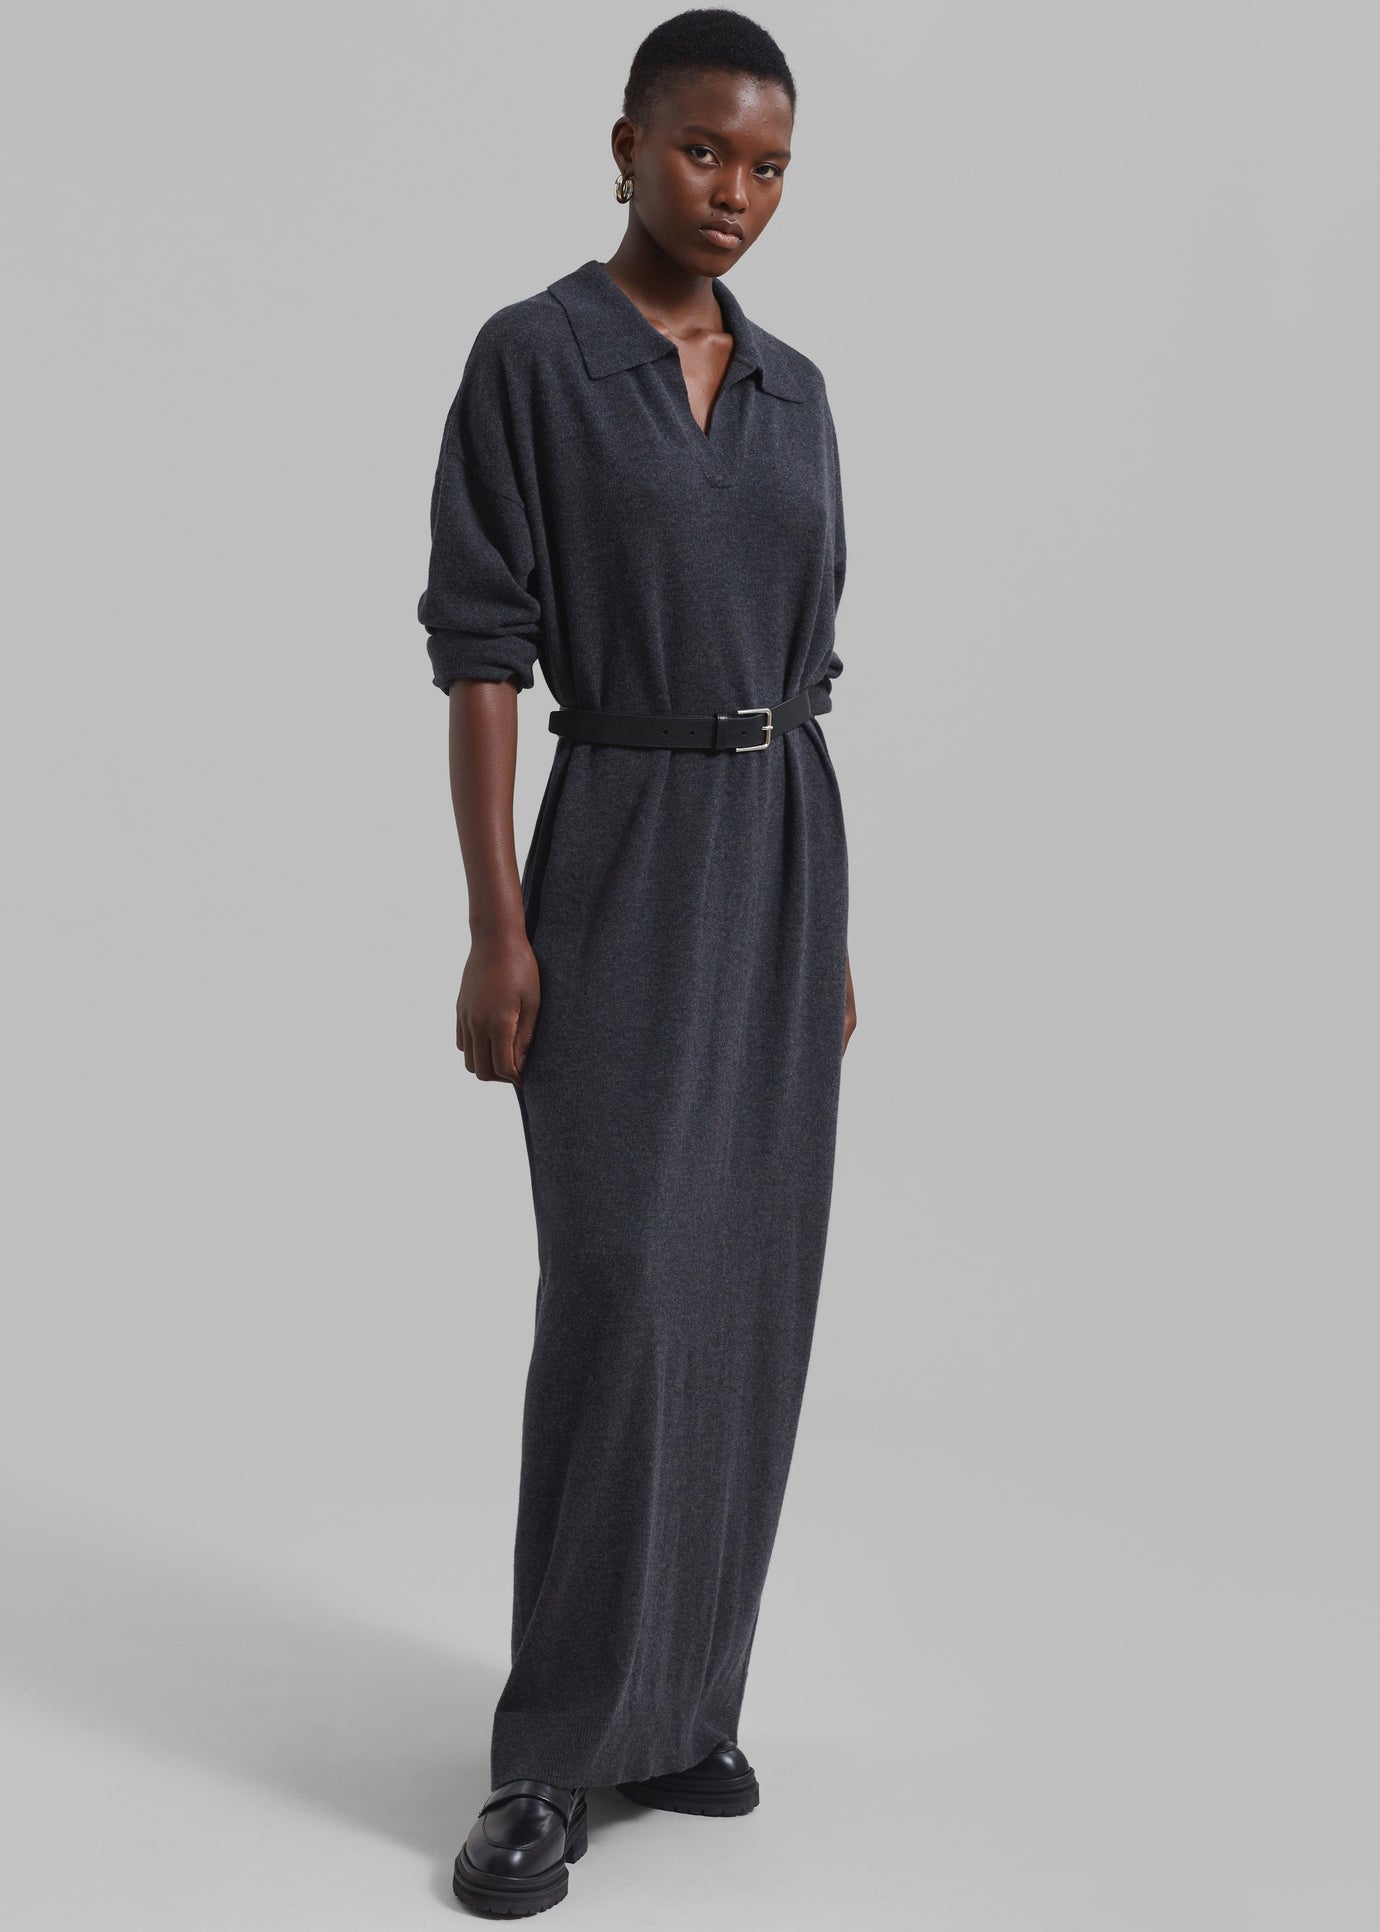 Siobhan Long Knit Dress - Charcoal